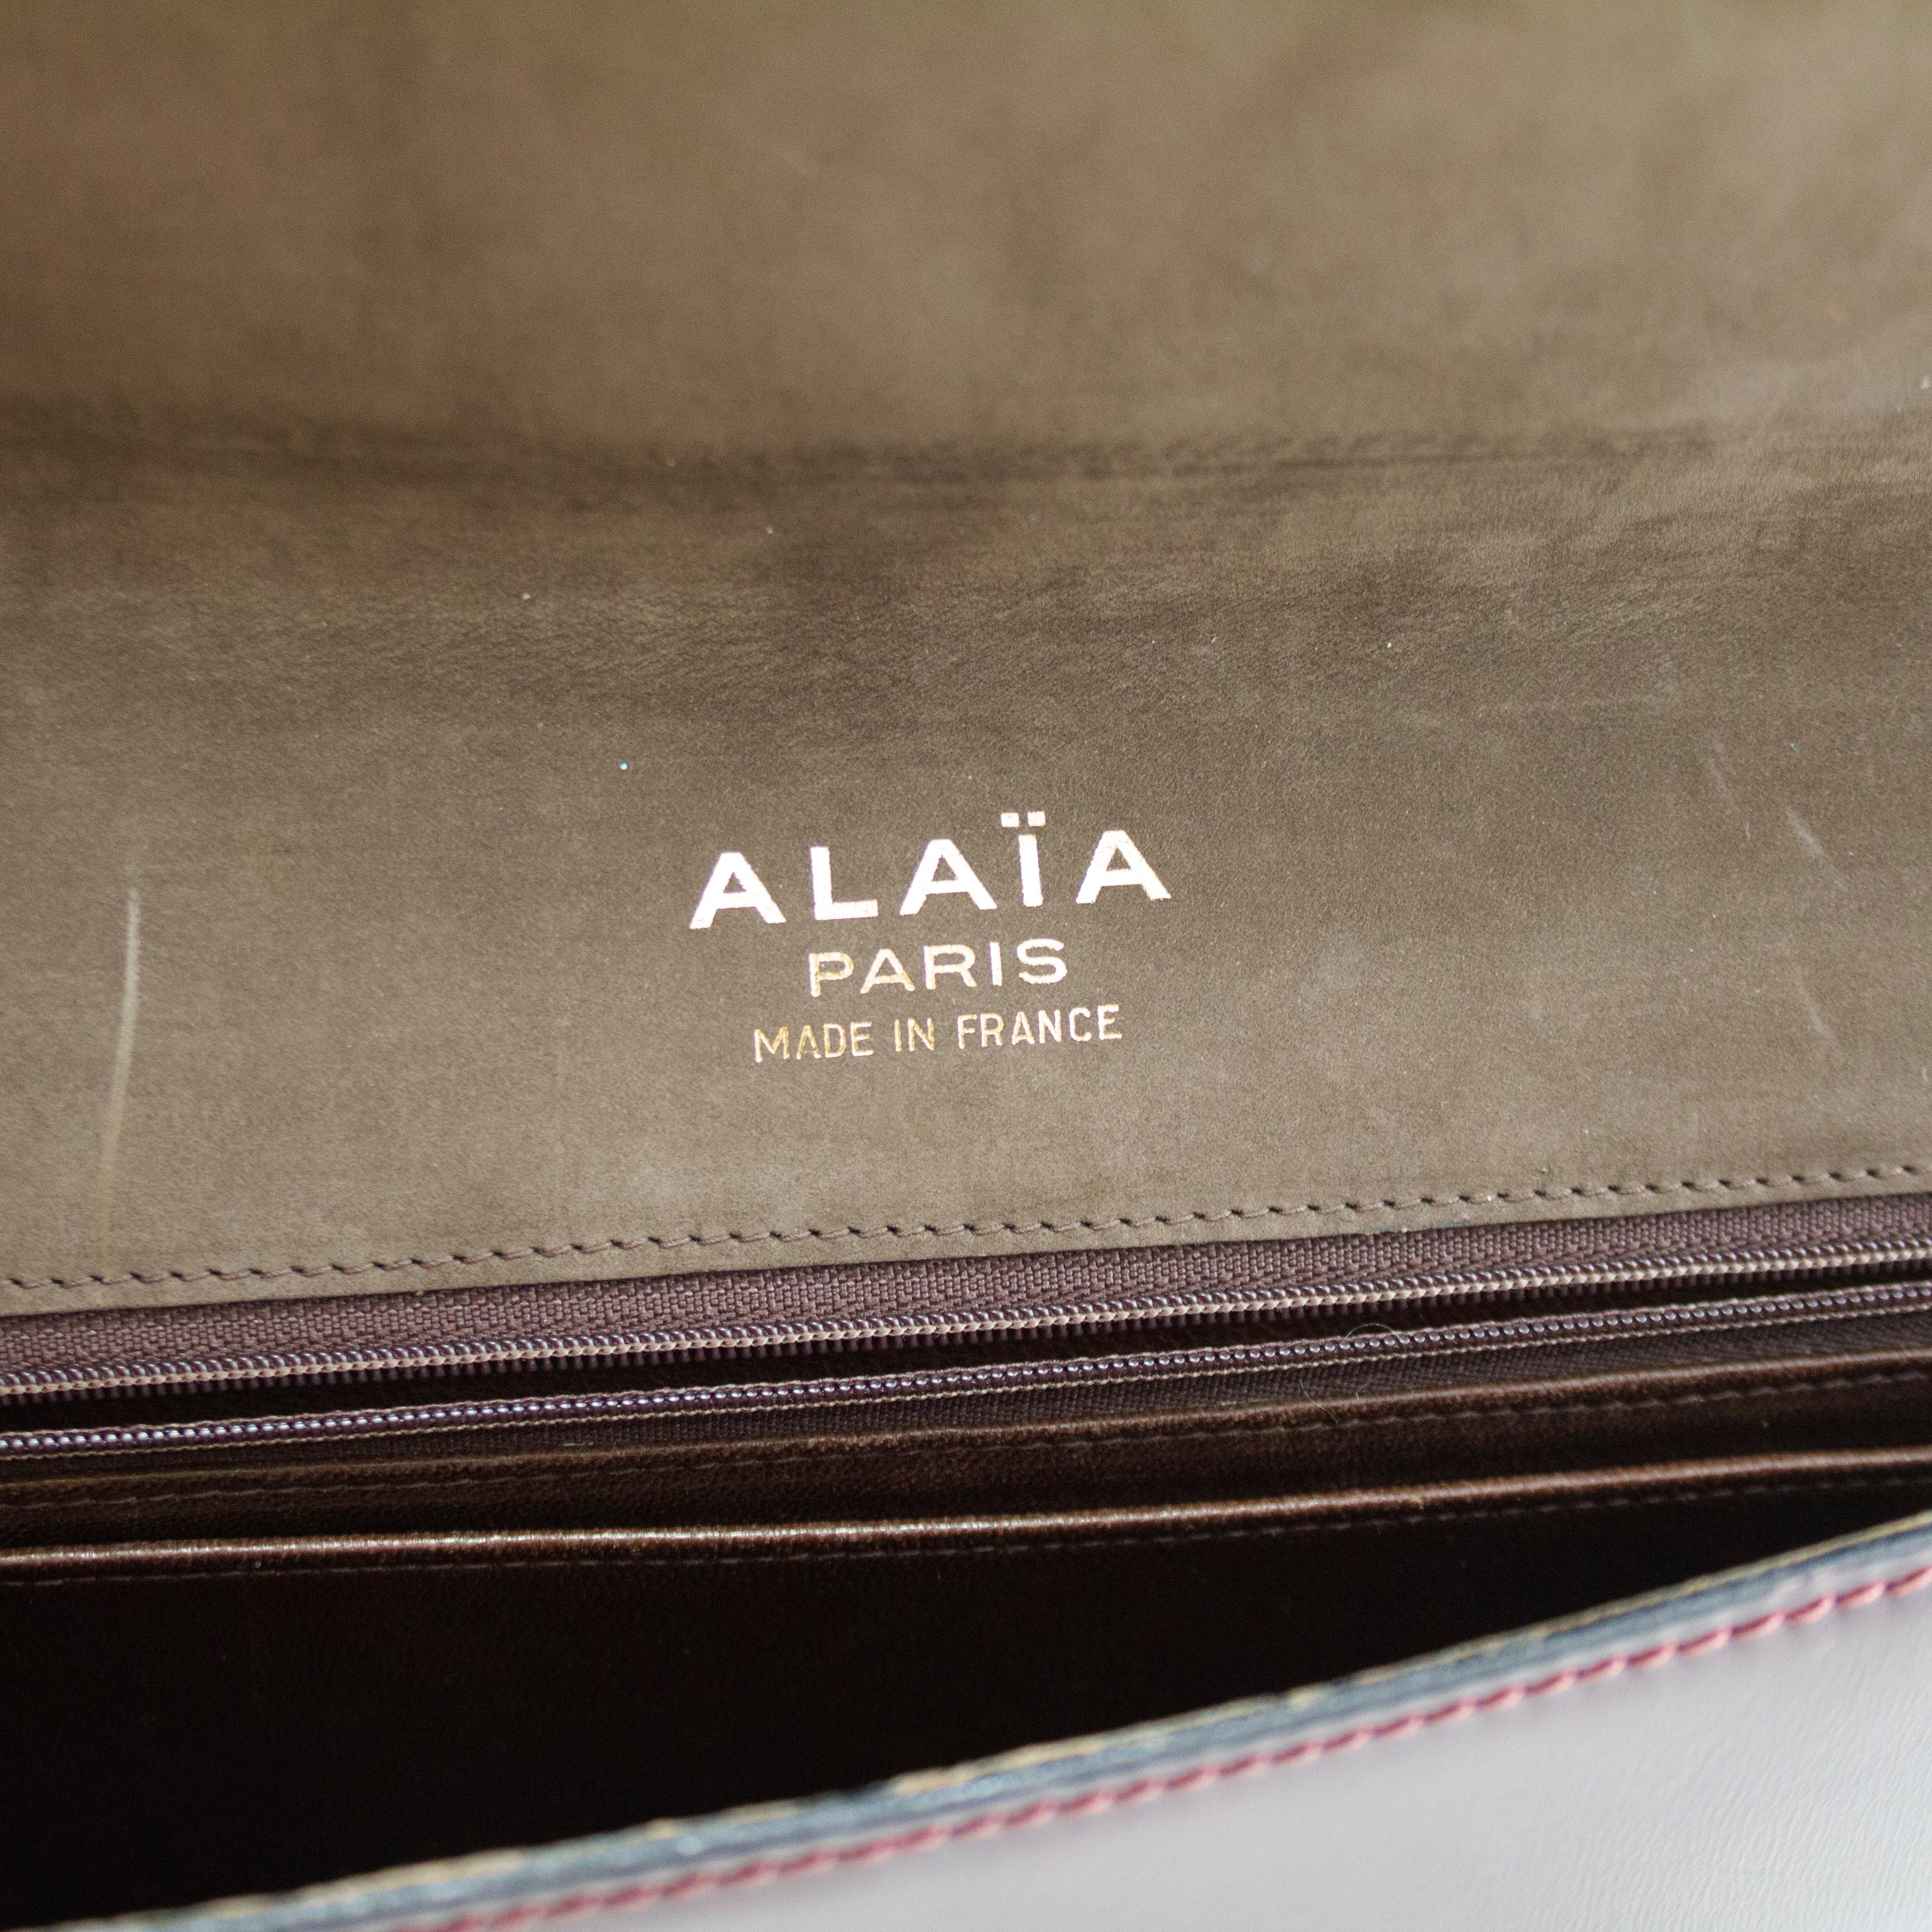 Portefeuille en cuir marron Alaa des années 1990  Bon état - En vente à Toronto, Ontario